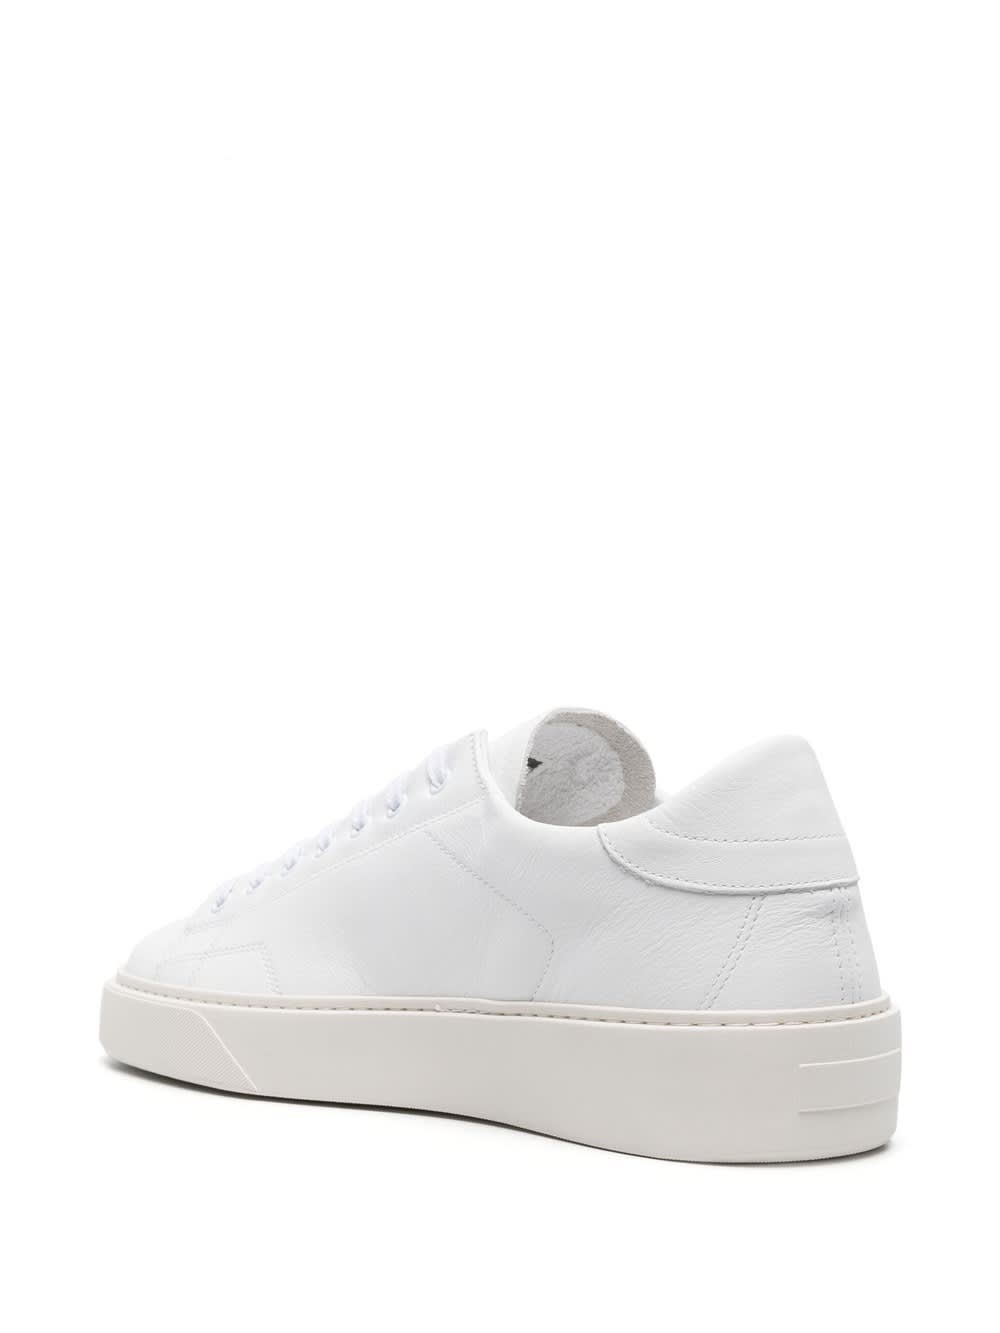 Shop Date White Levante Sneakers